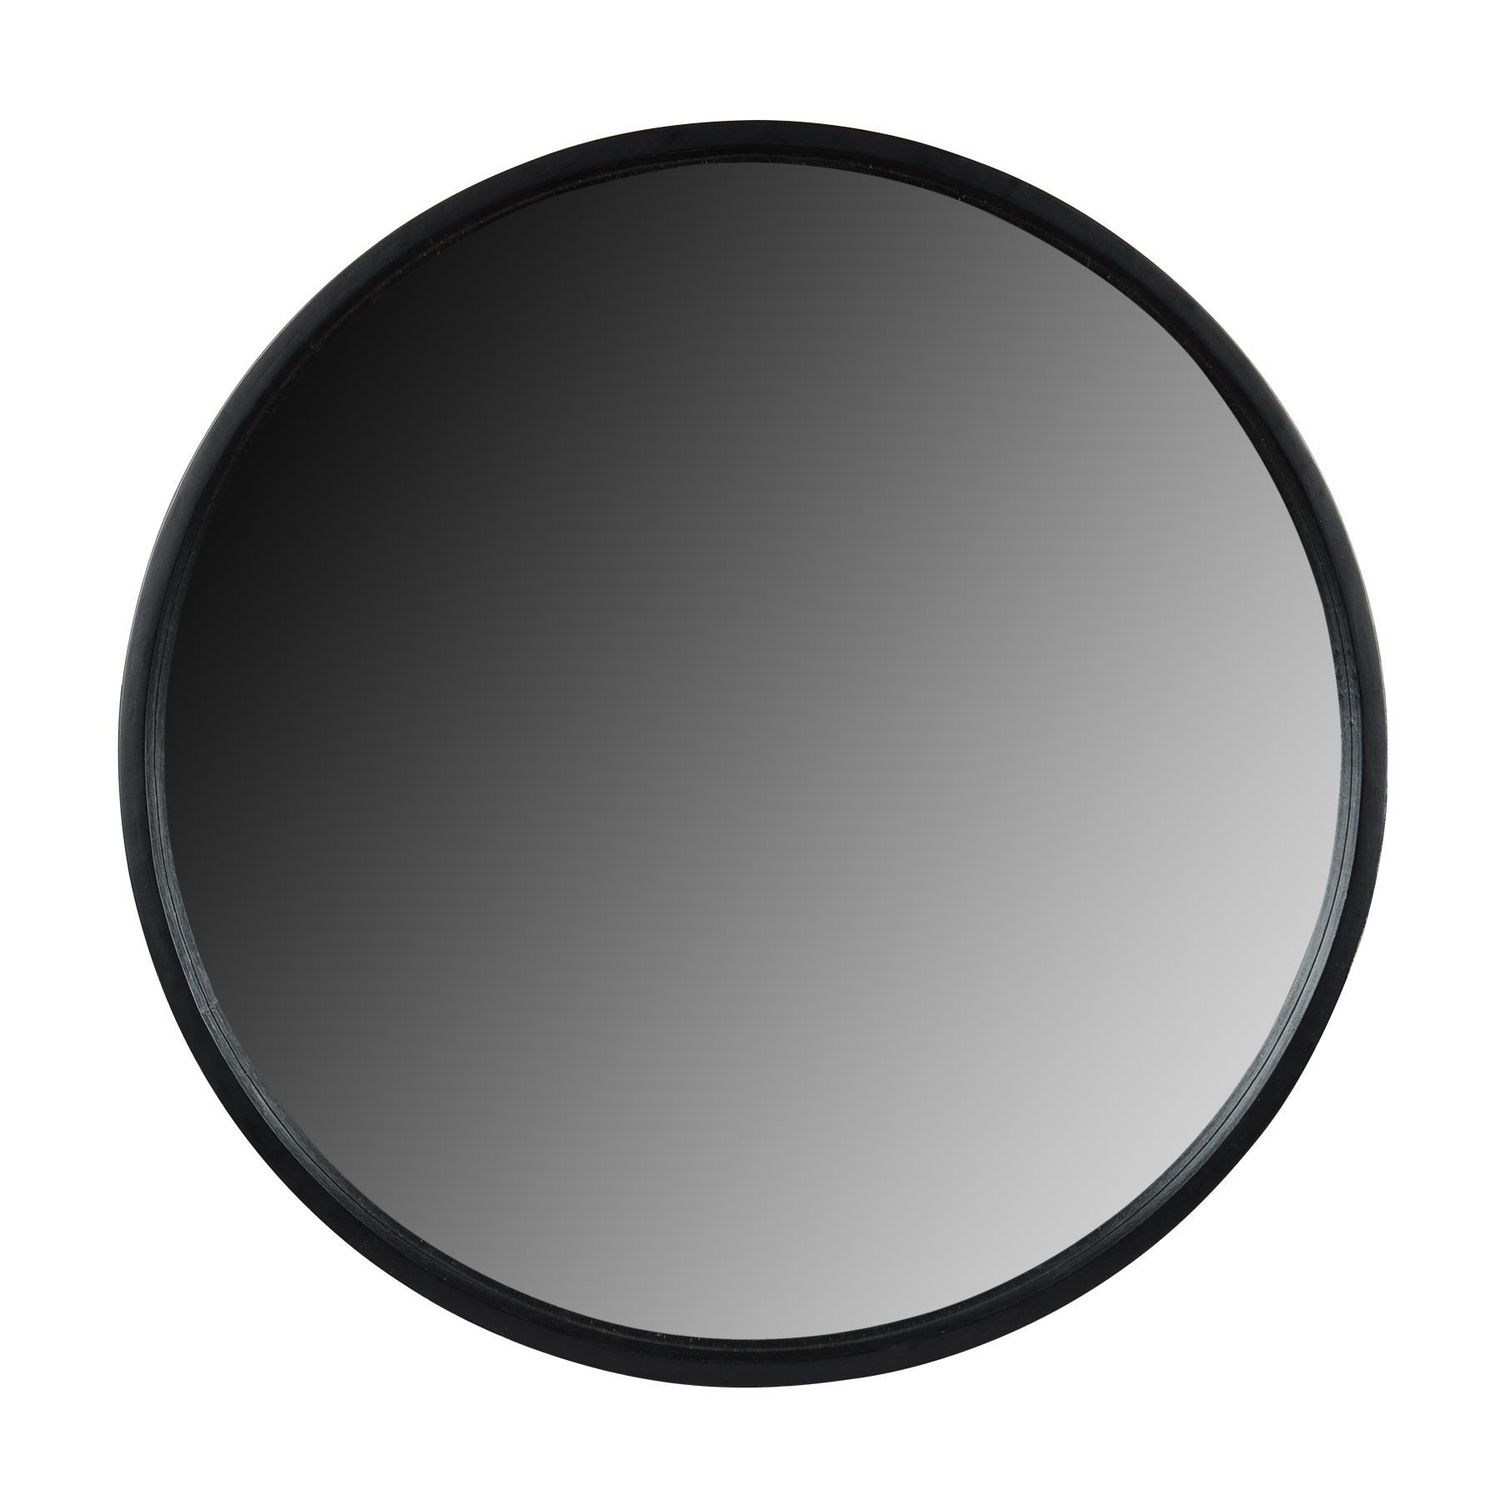 Hometrends Black Finish Round Mirror, Round Mirror With Black Frame Canada